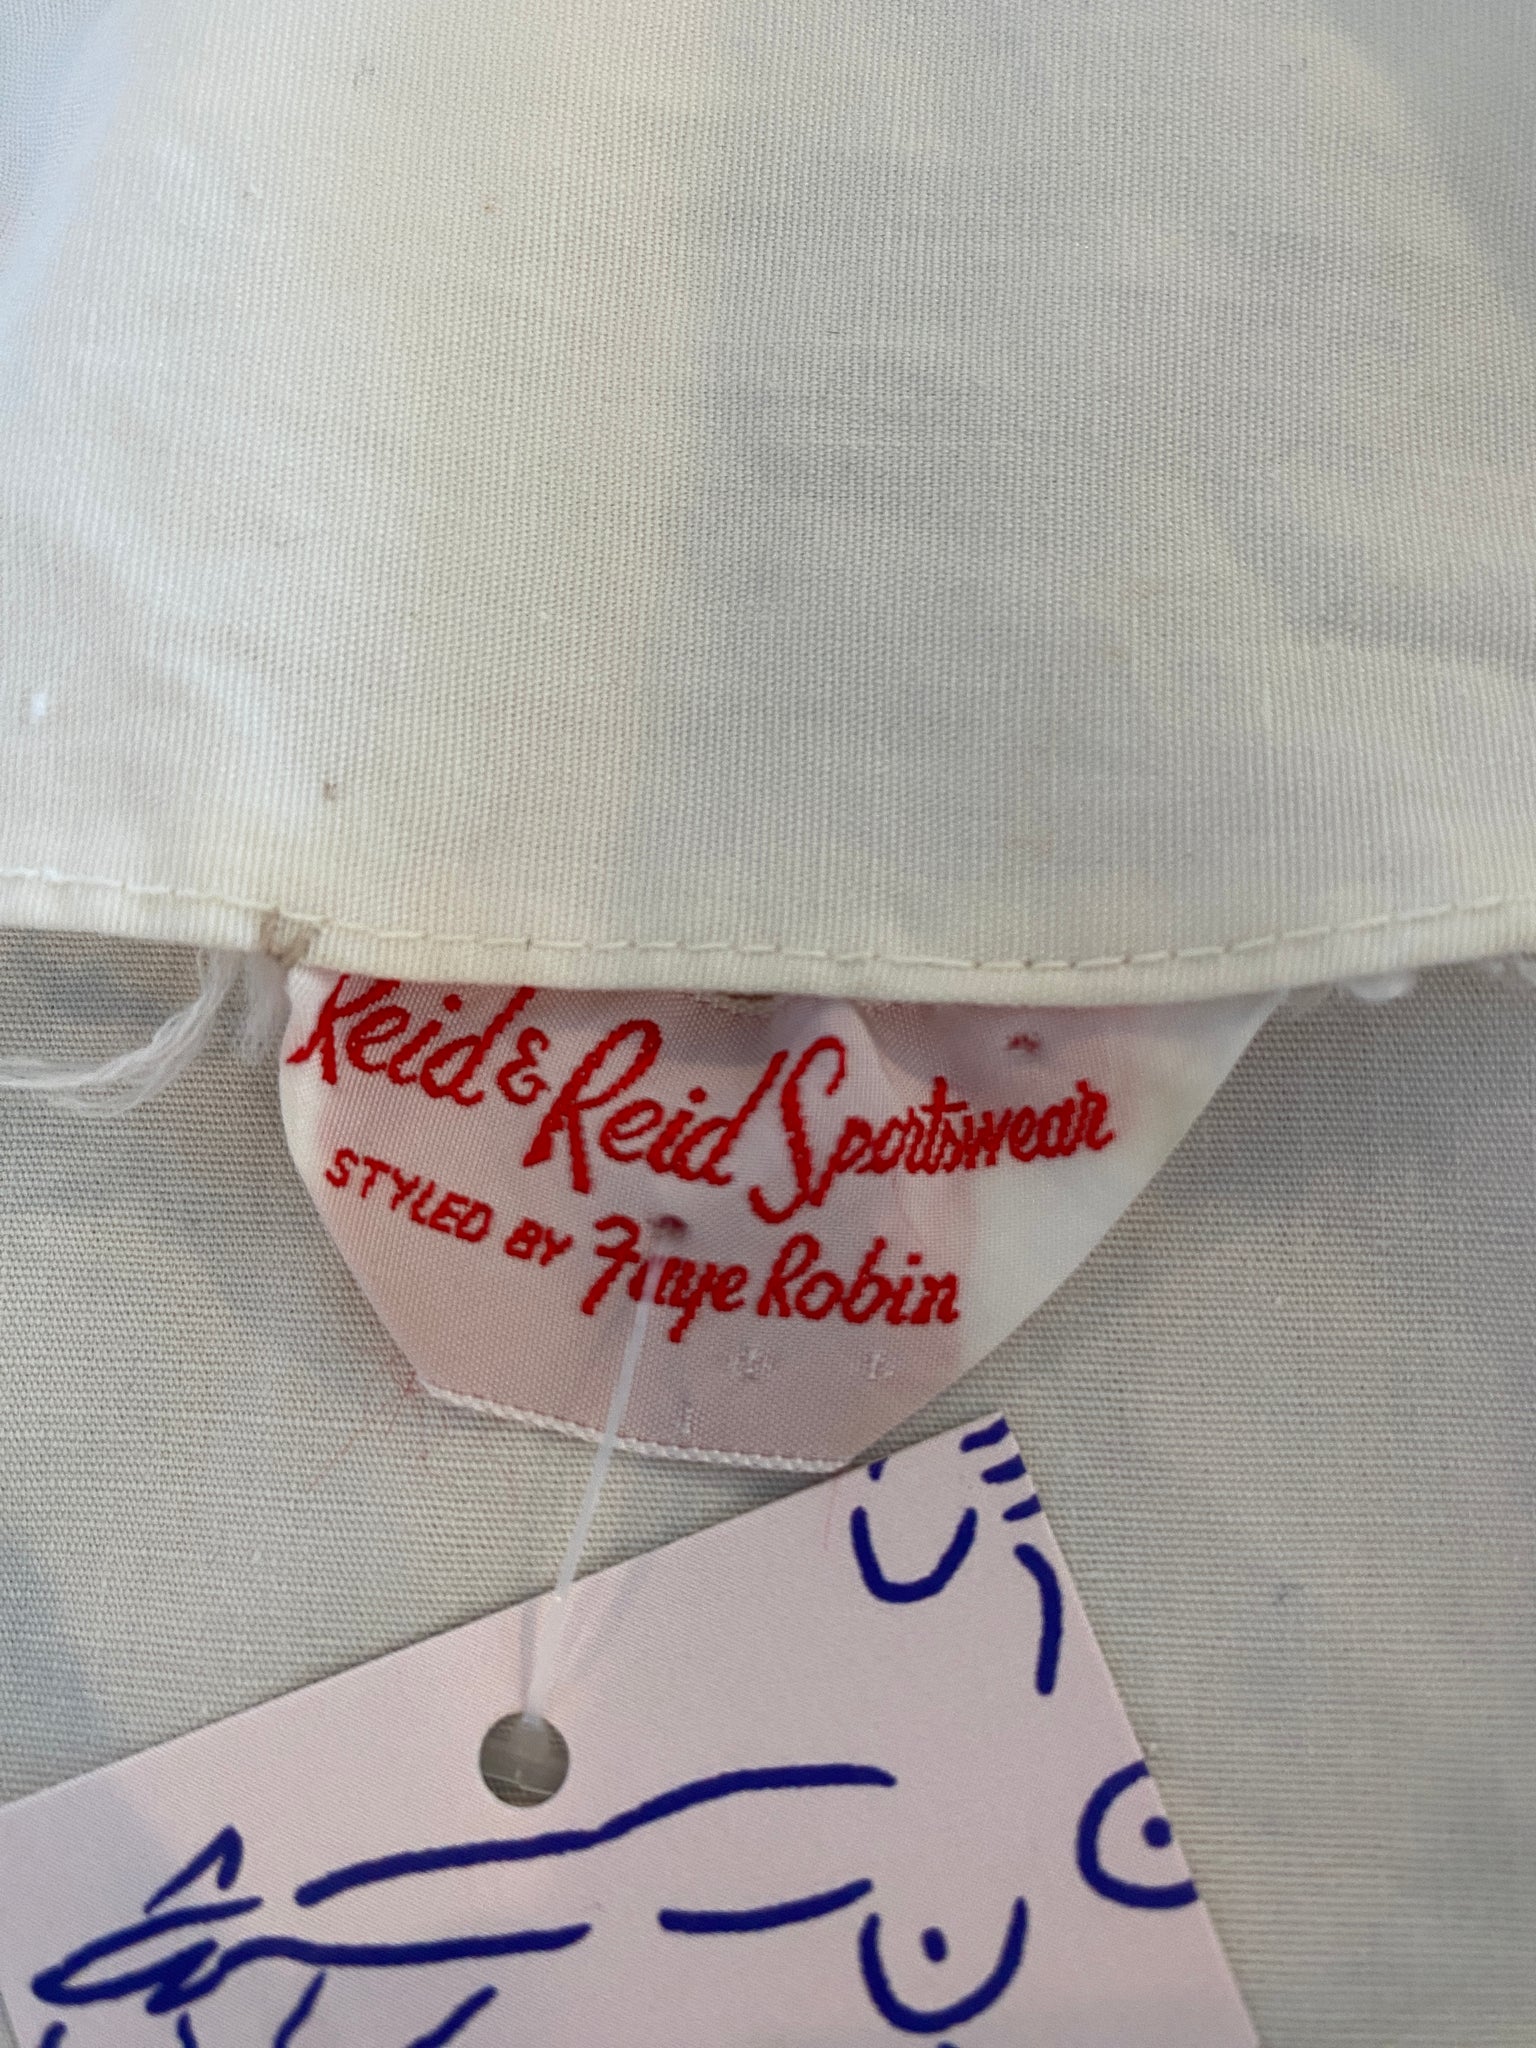 Vintage Reid & Reid Sportswear Embroidered Puff Sleeve Top (XS)